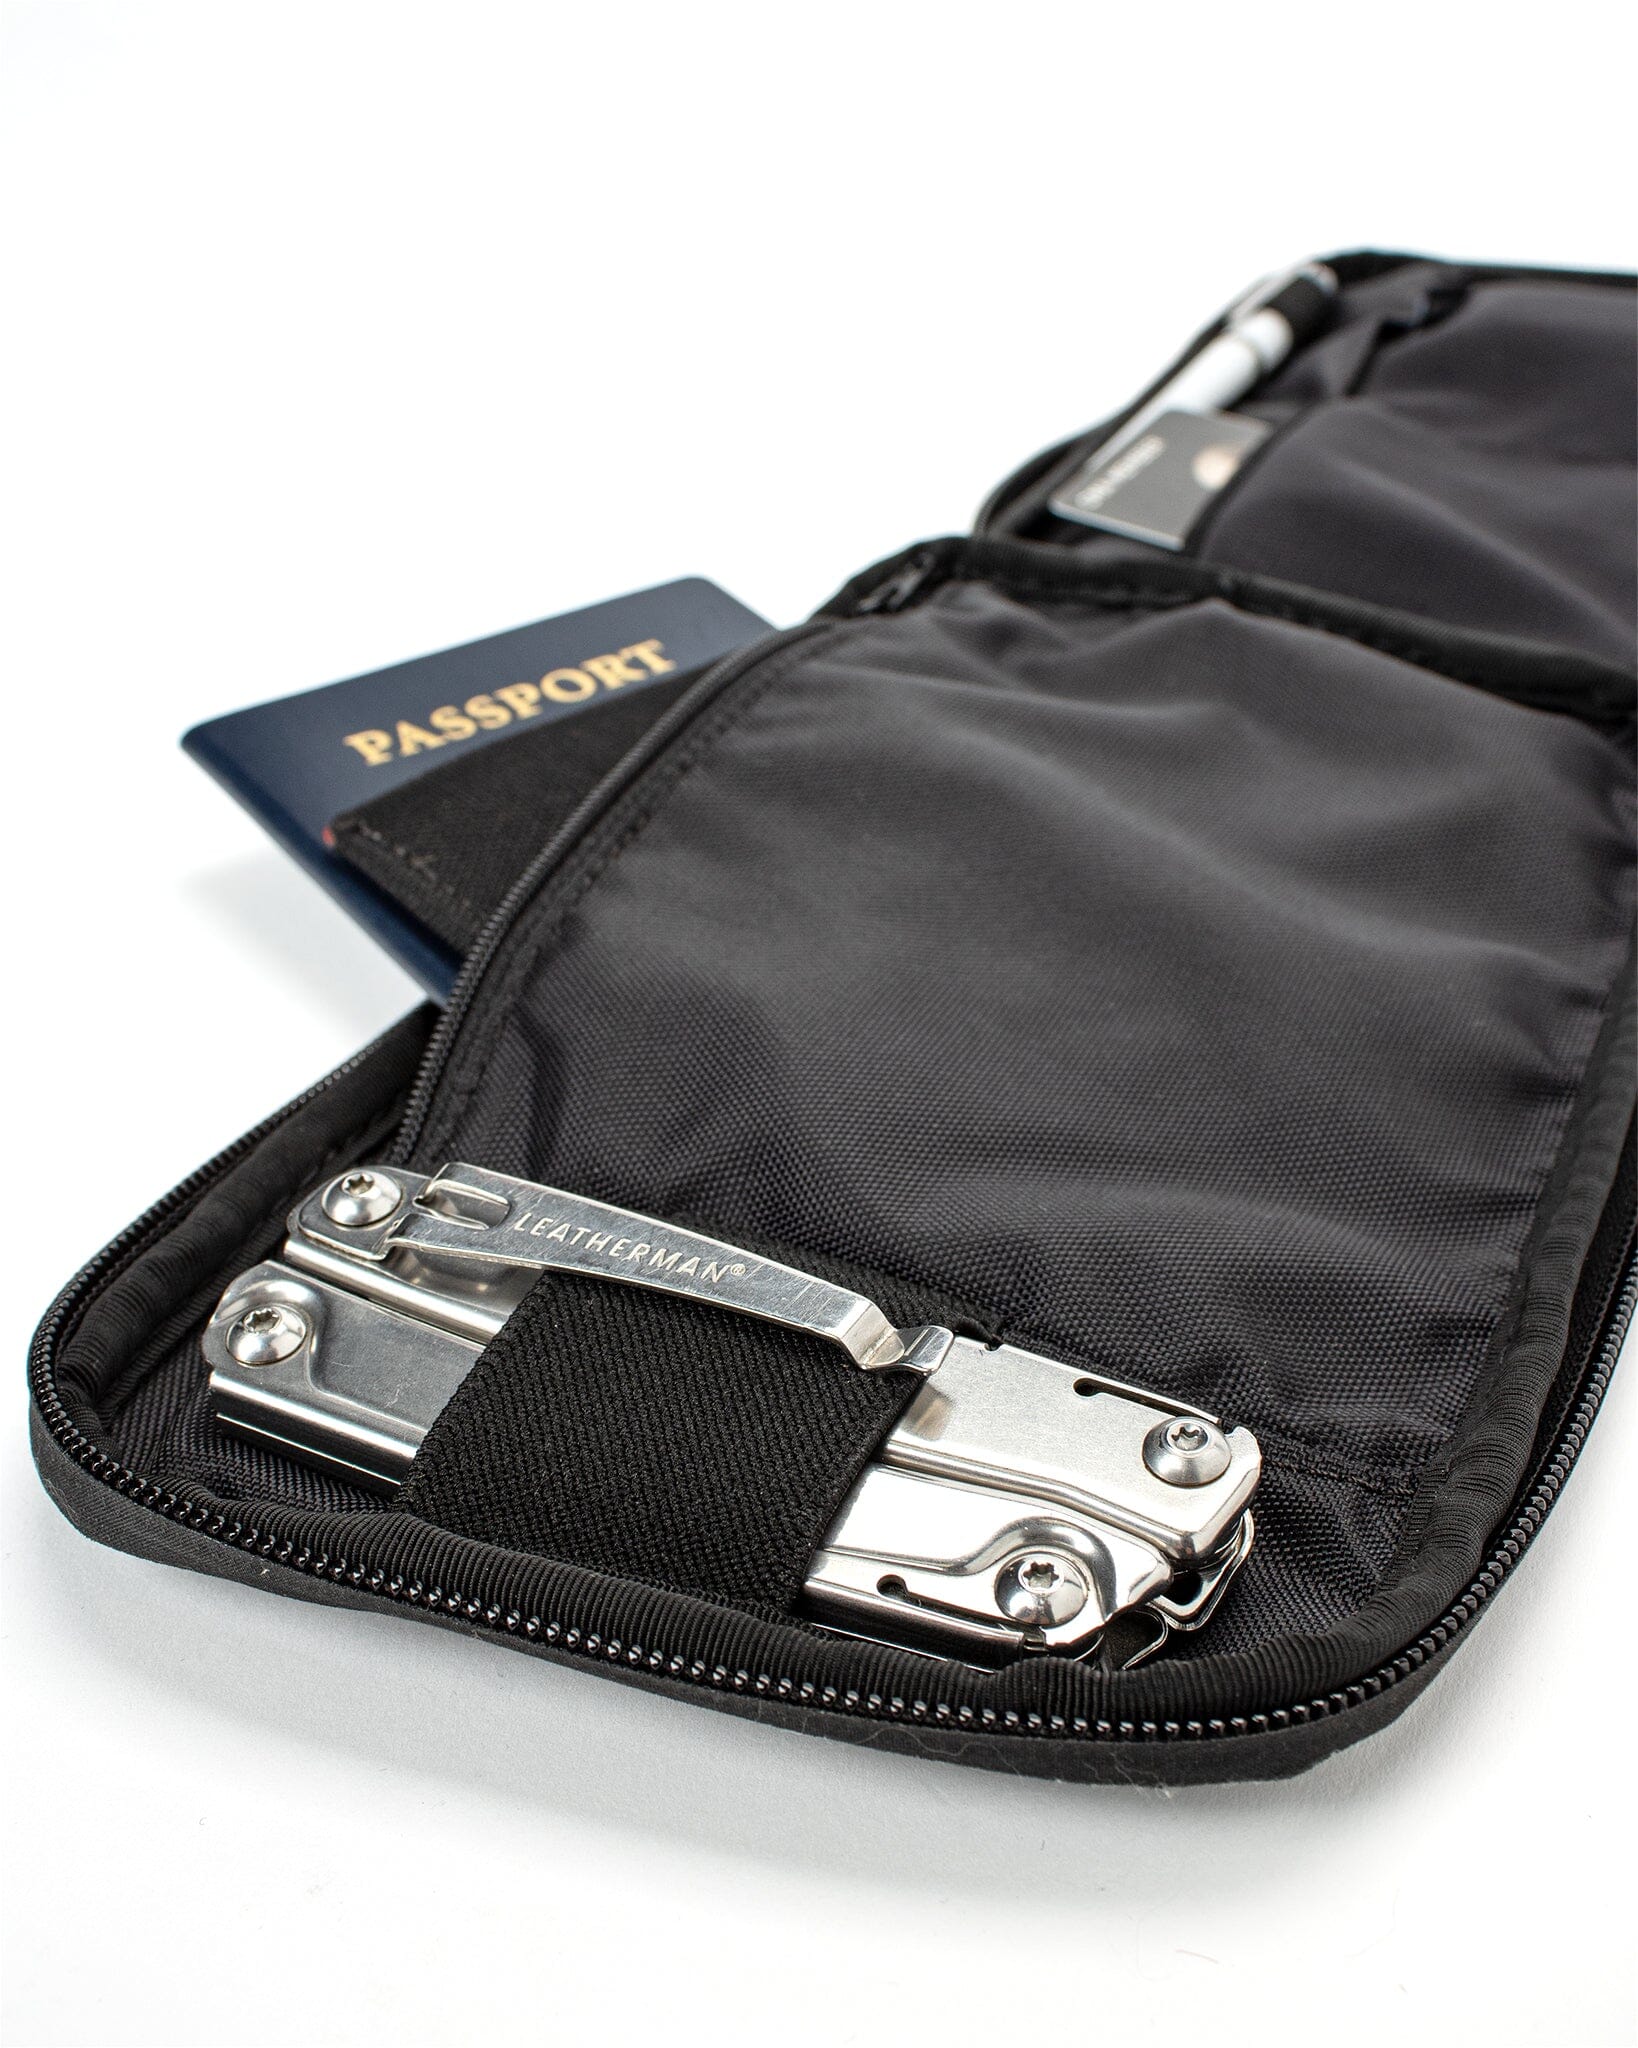 AUX™ Pocket - Stealth X-Pac RX30 Bag bolstr   